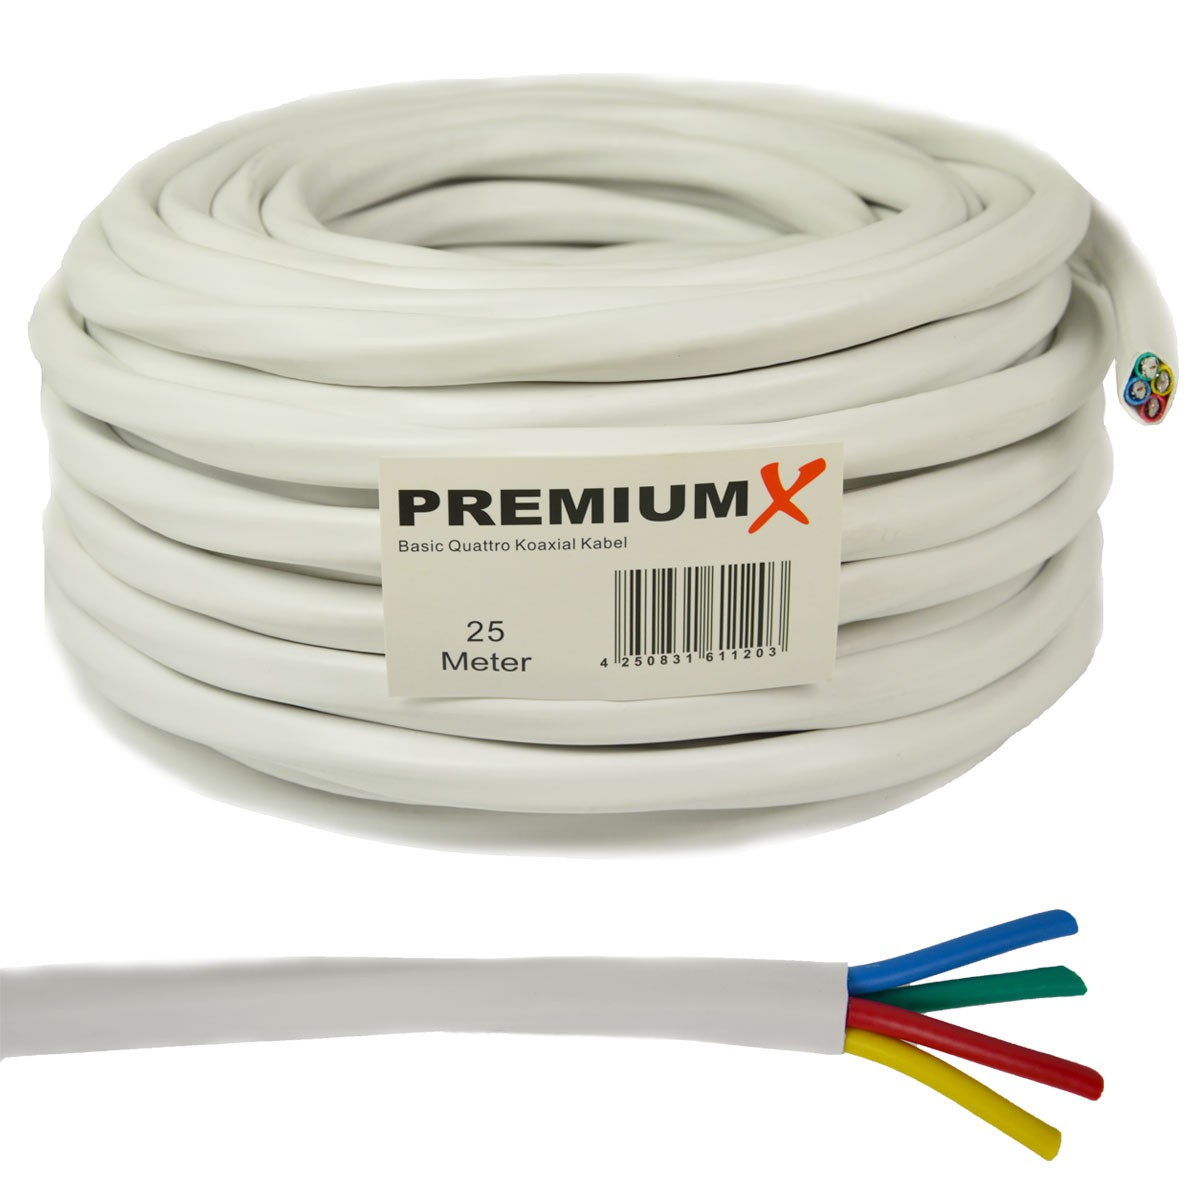 PREMIUMX 25m Basic Quattro Quad Kabel 16x Koaxial Weiß Antennenkabel 90dB SAT F-Stecker